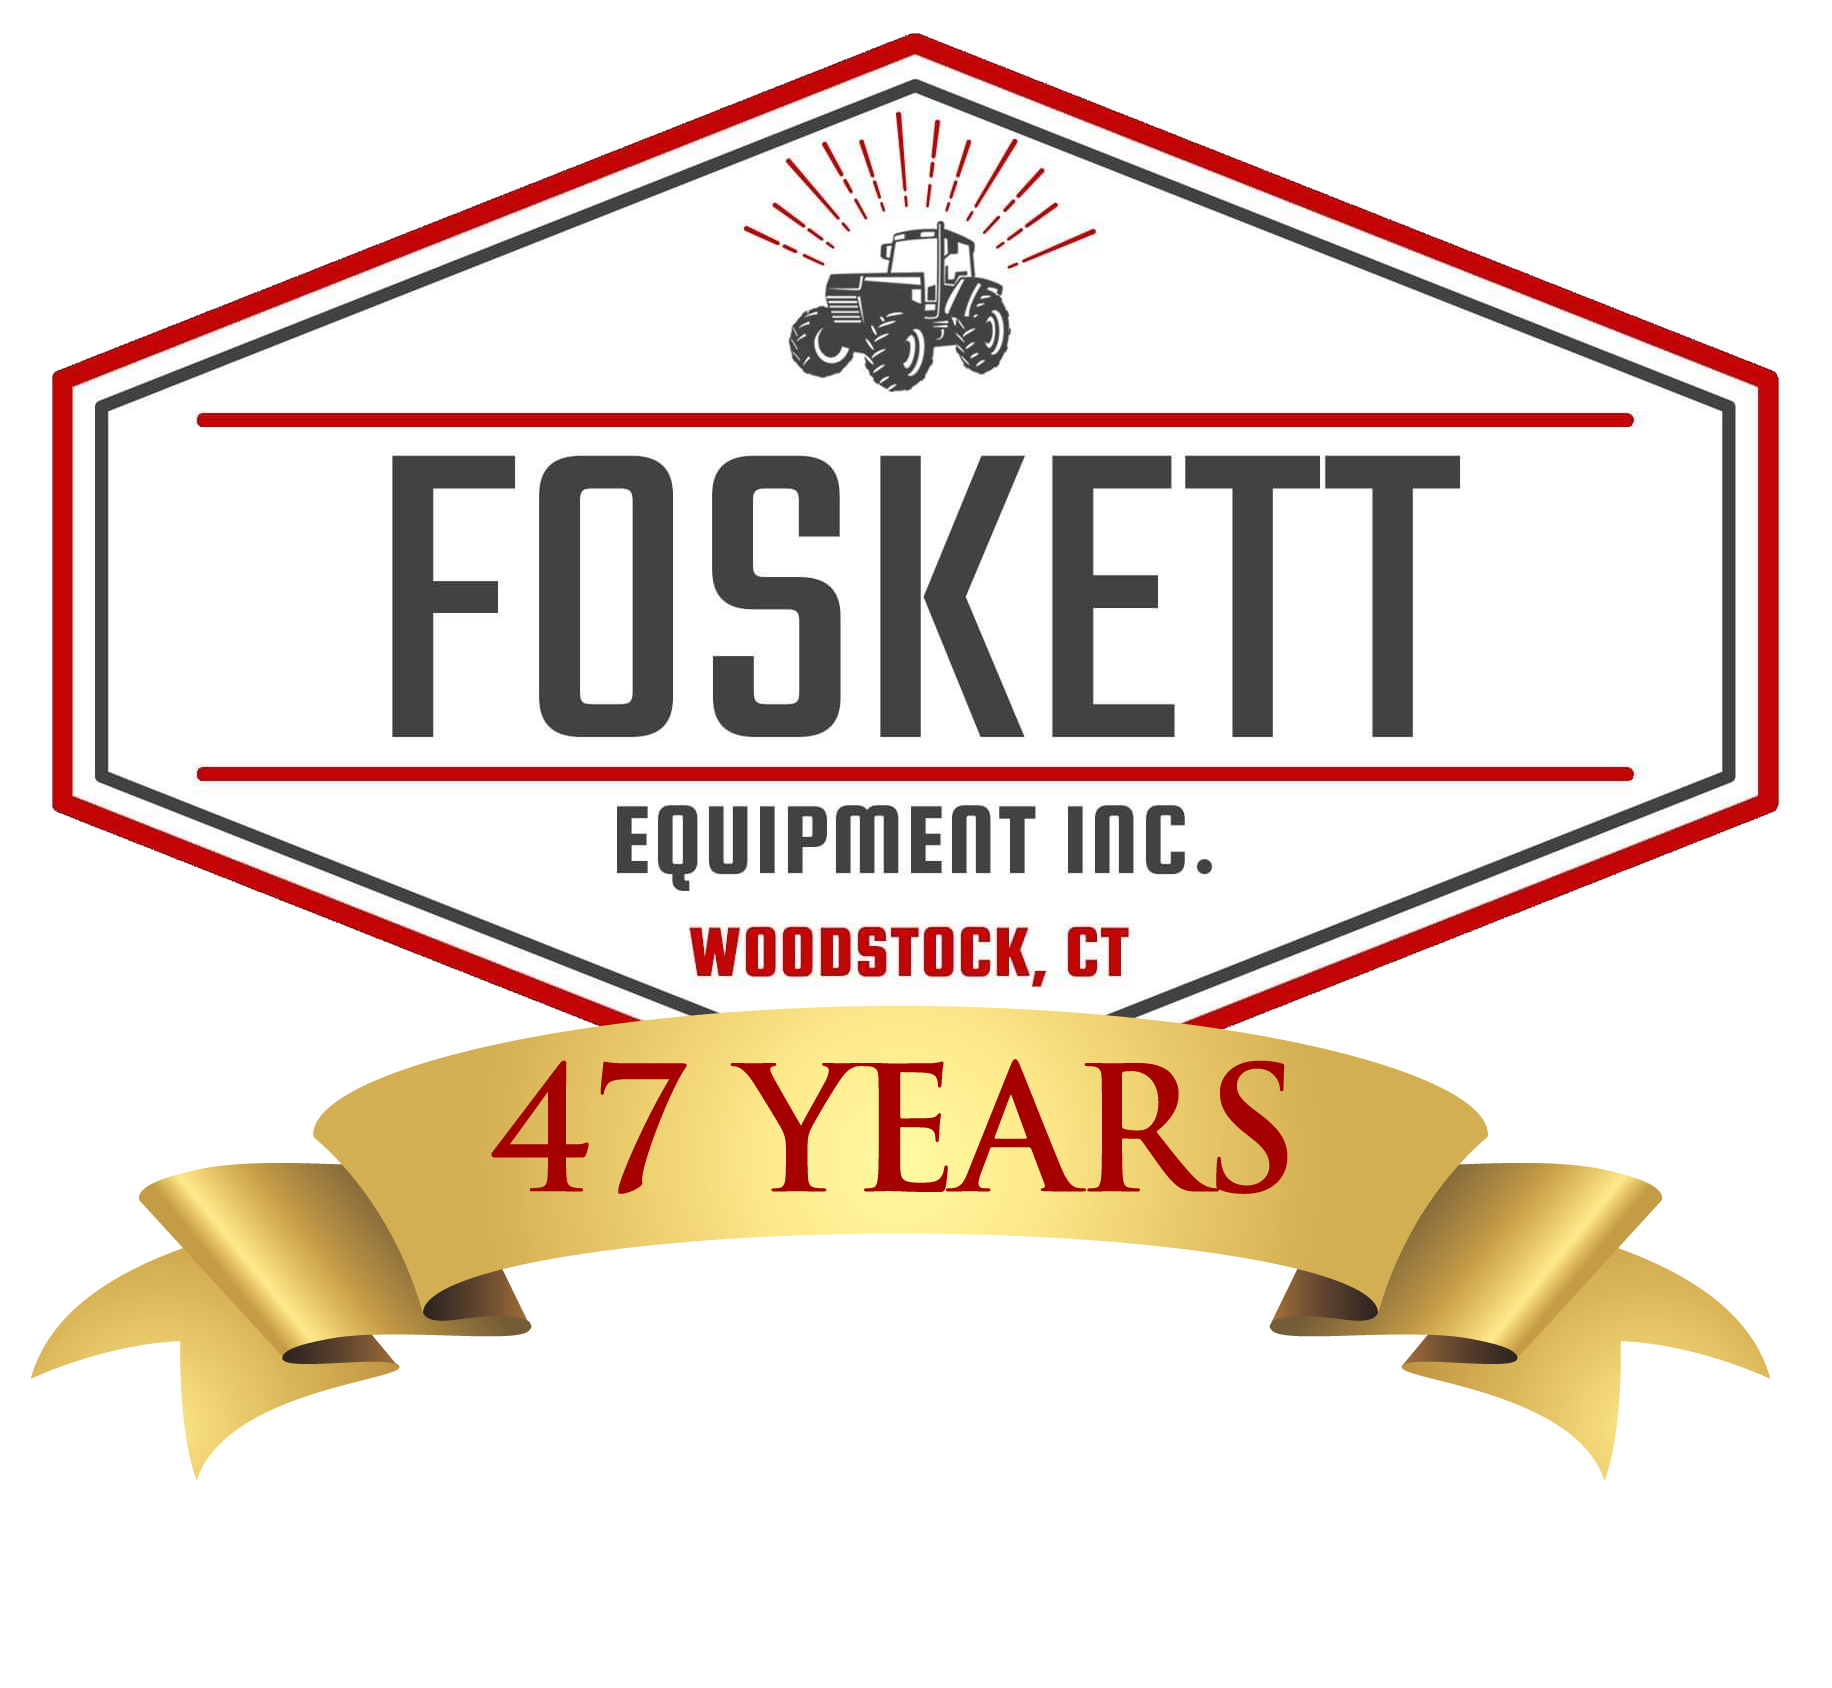 Foskett Equipment, Inc